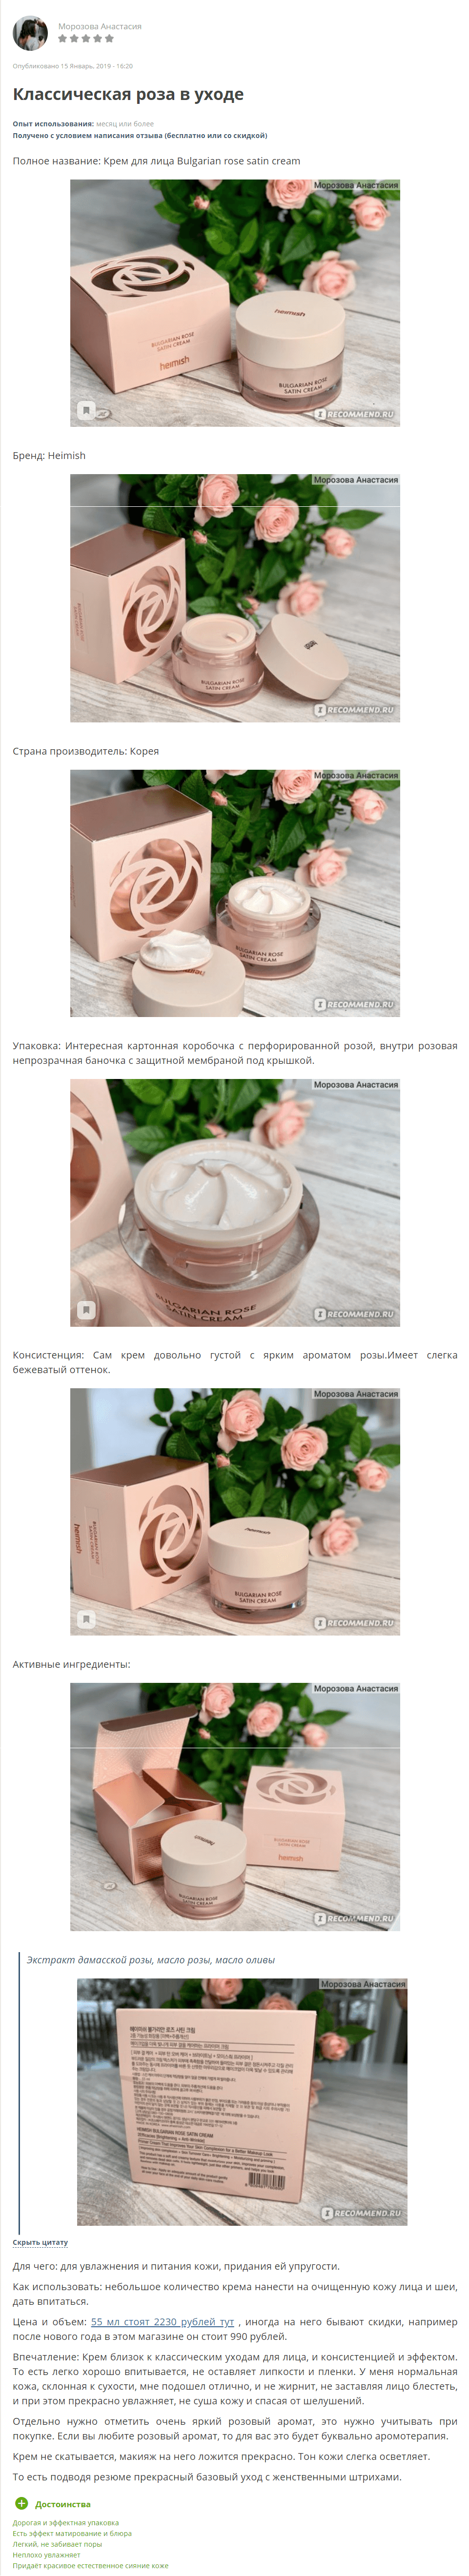 Bulgarian Rose Satin Cream [Heimish] отзыв 3 (1)